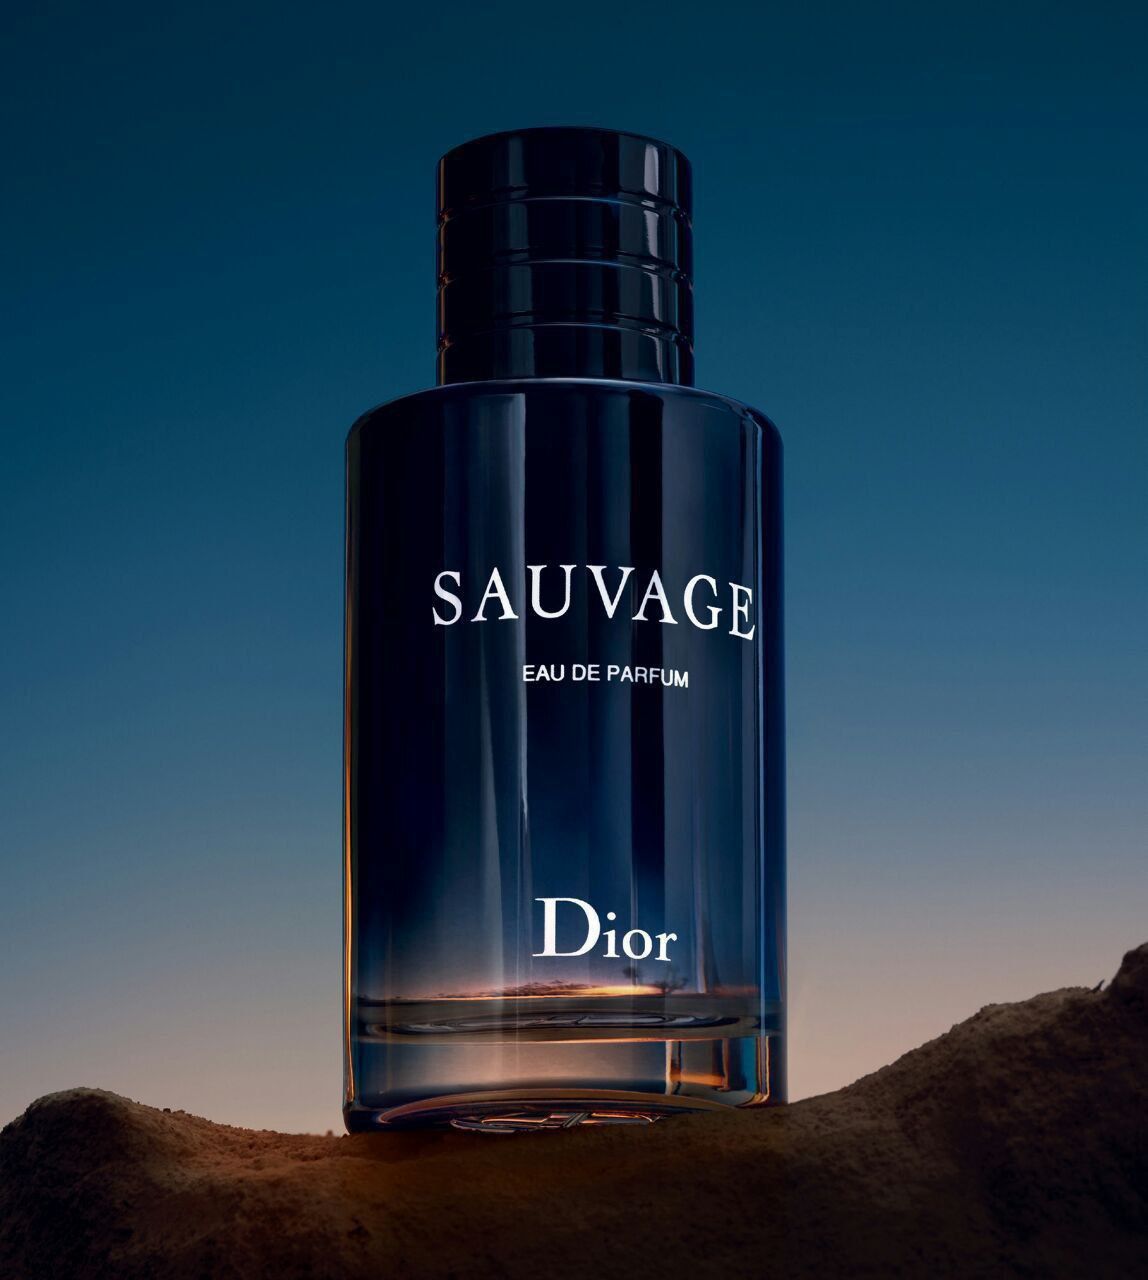 Christian Dior Sauvage 100ml ORIGINAL